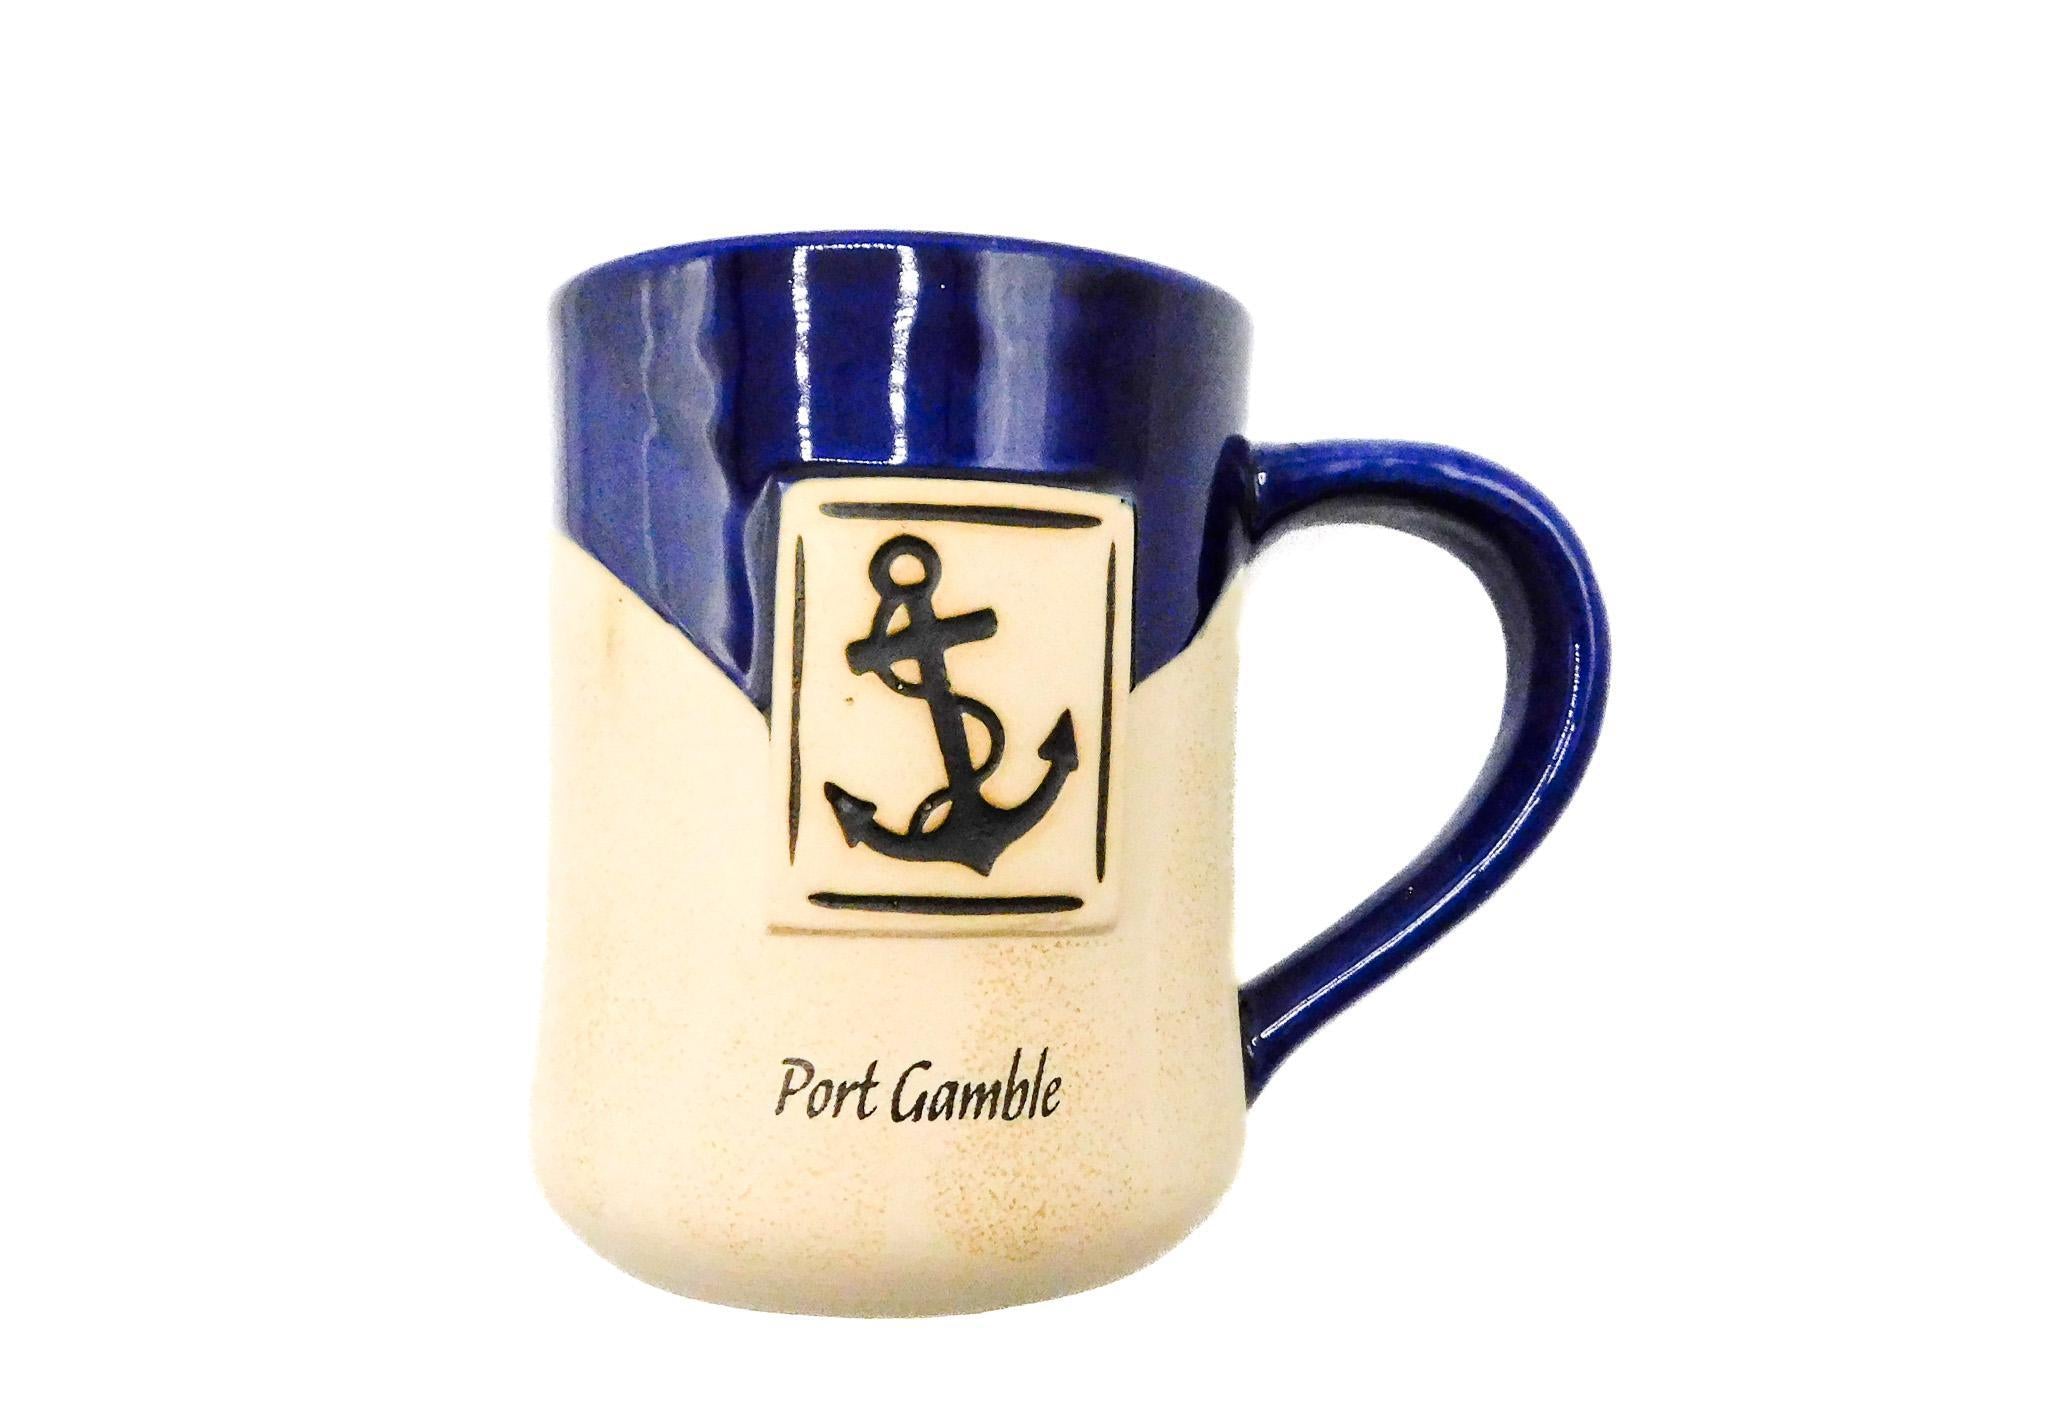 Port Gamble Mug a pottery mug that features an intricate anchor design